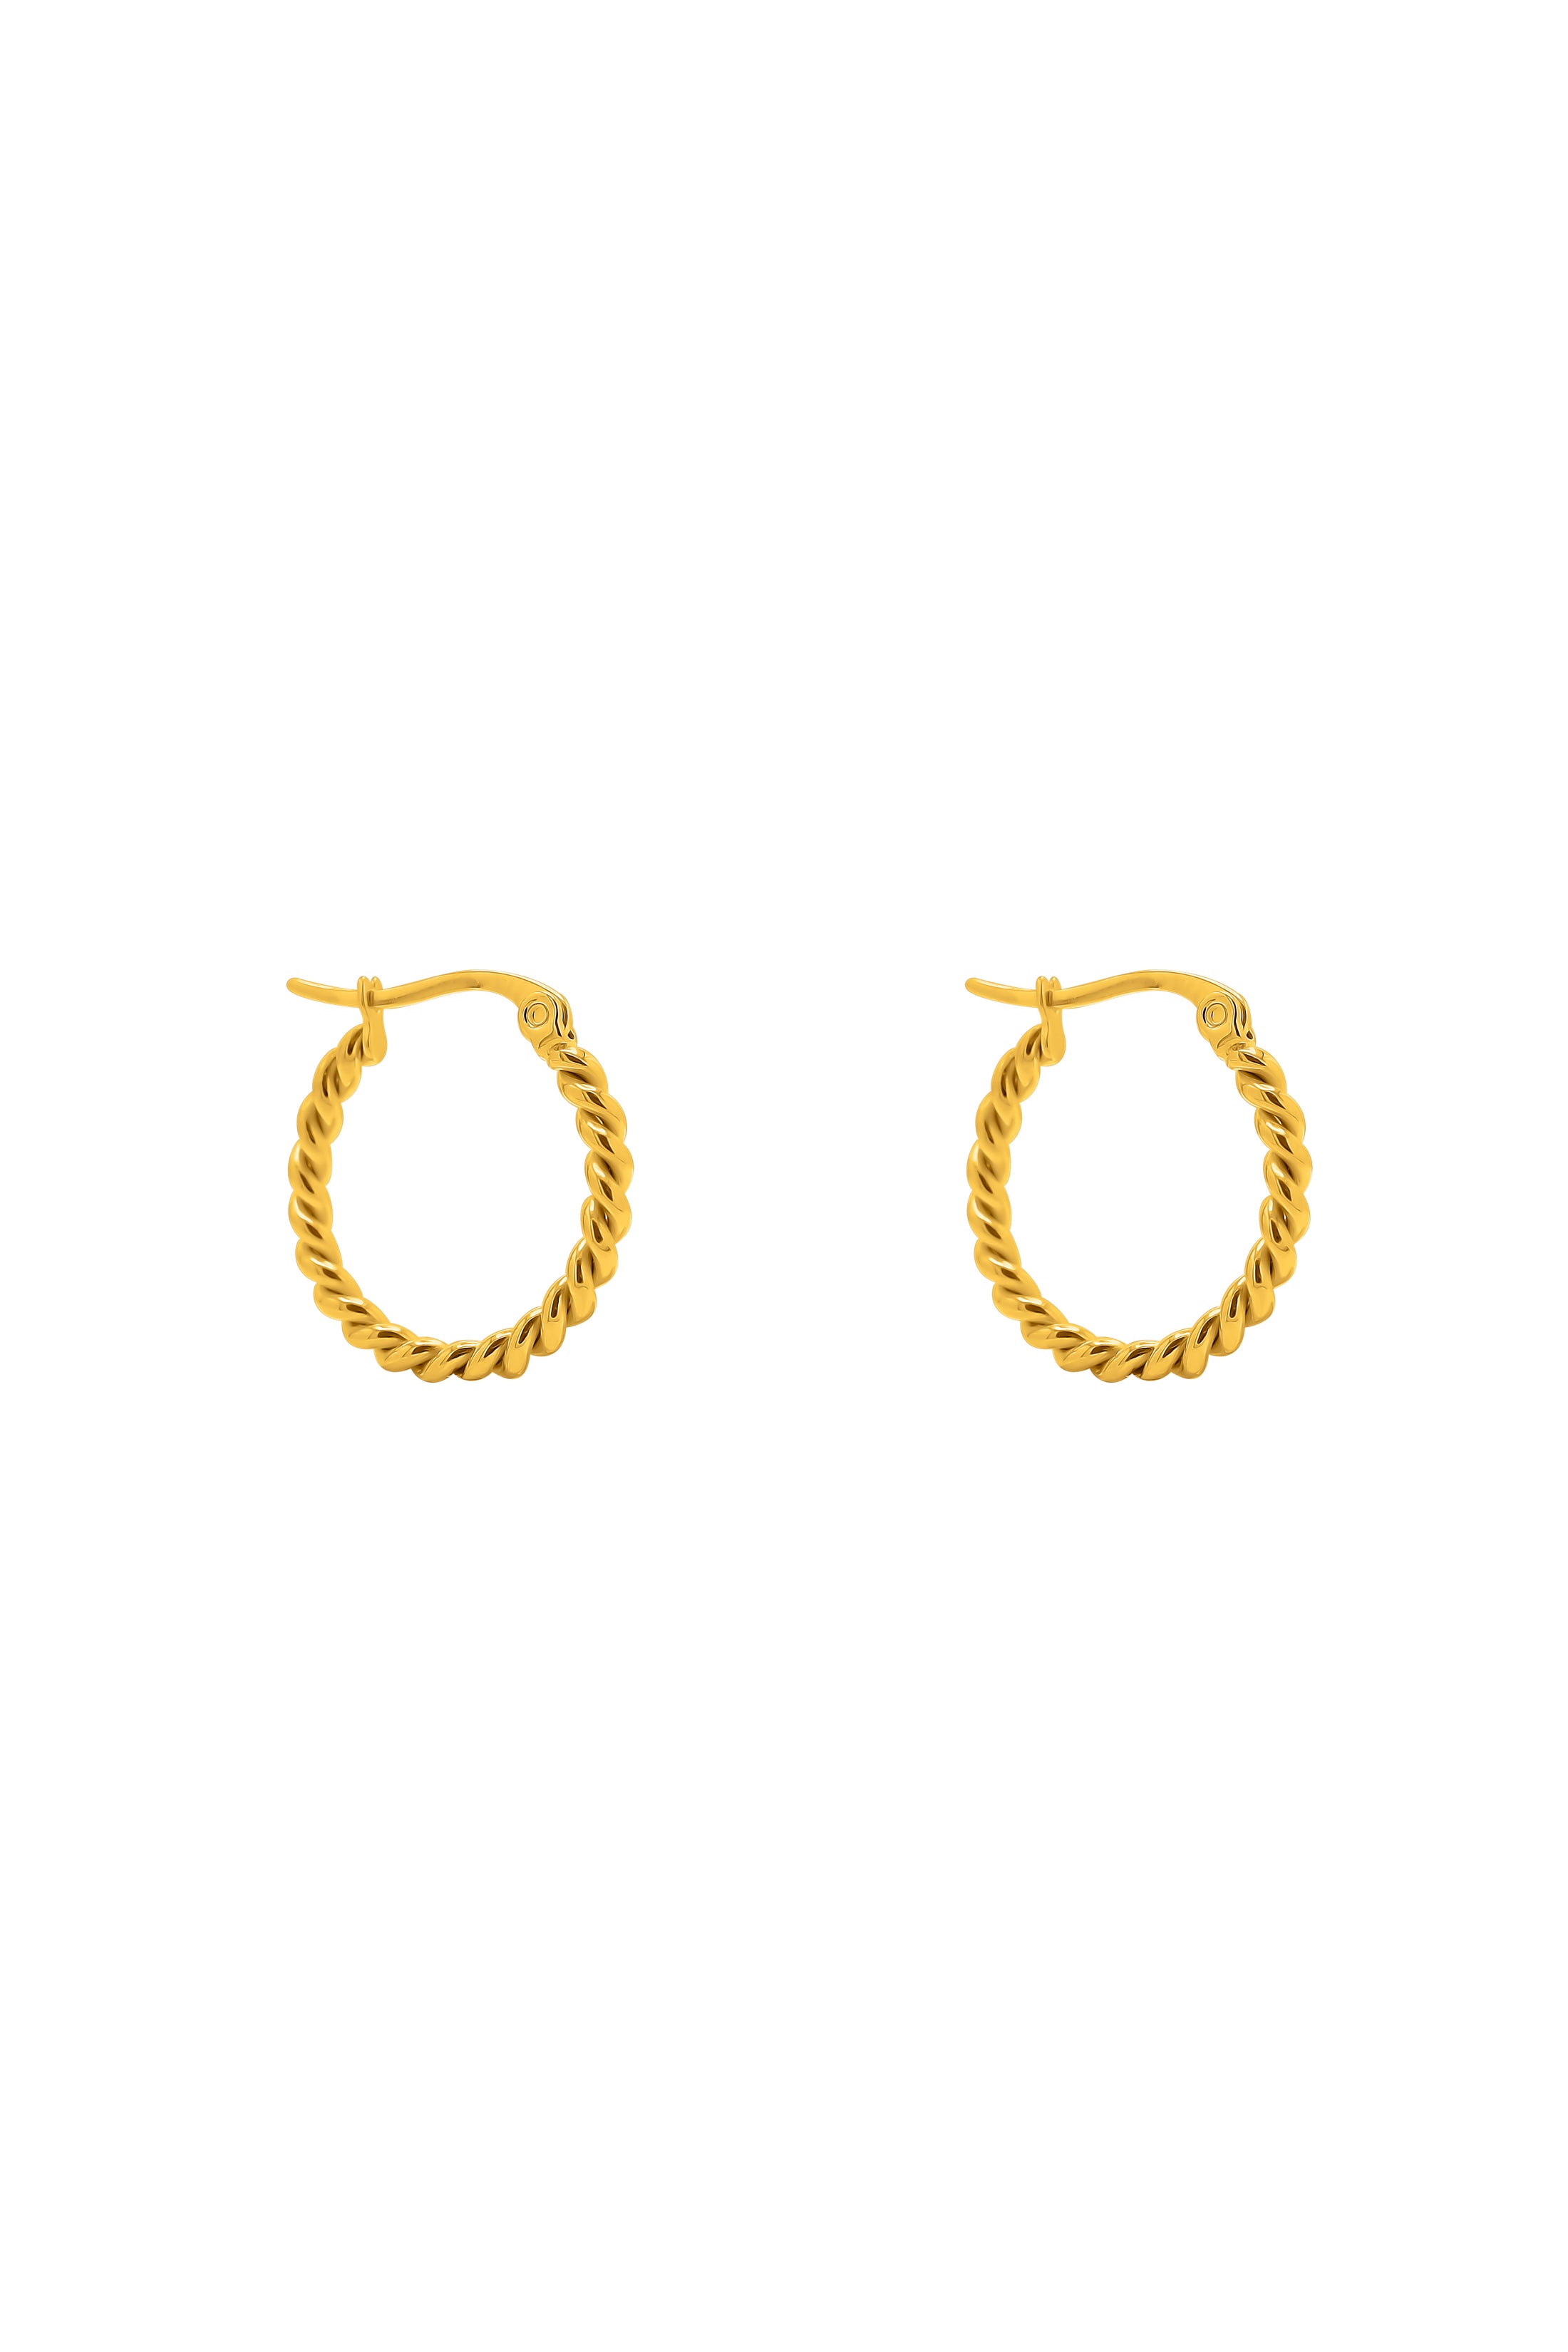 Carisma Logo Letter Pendant & Multi Facade Carisma Hoop Earrings